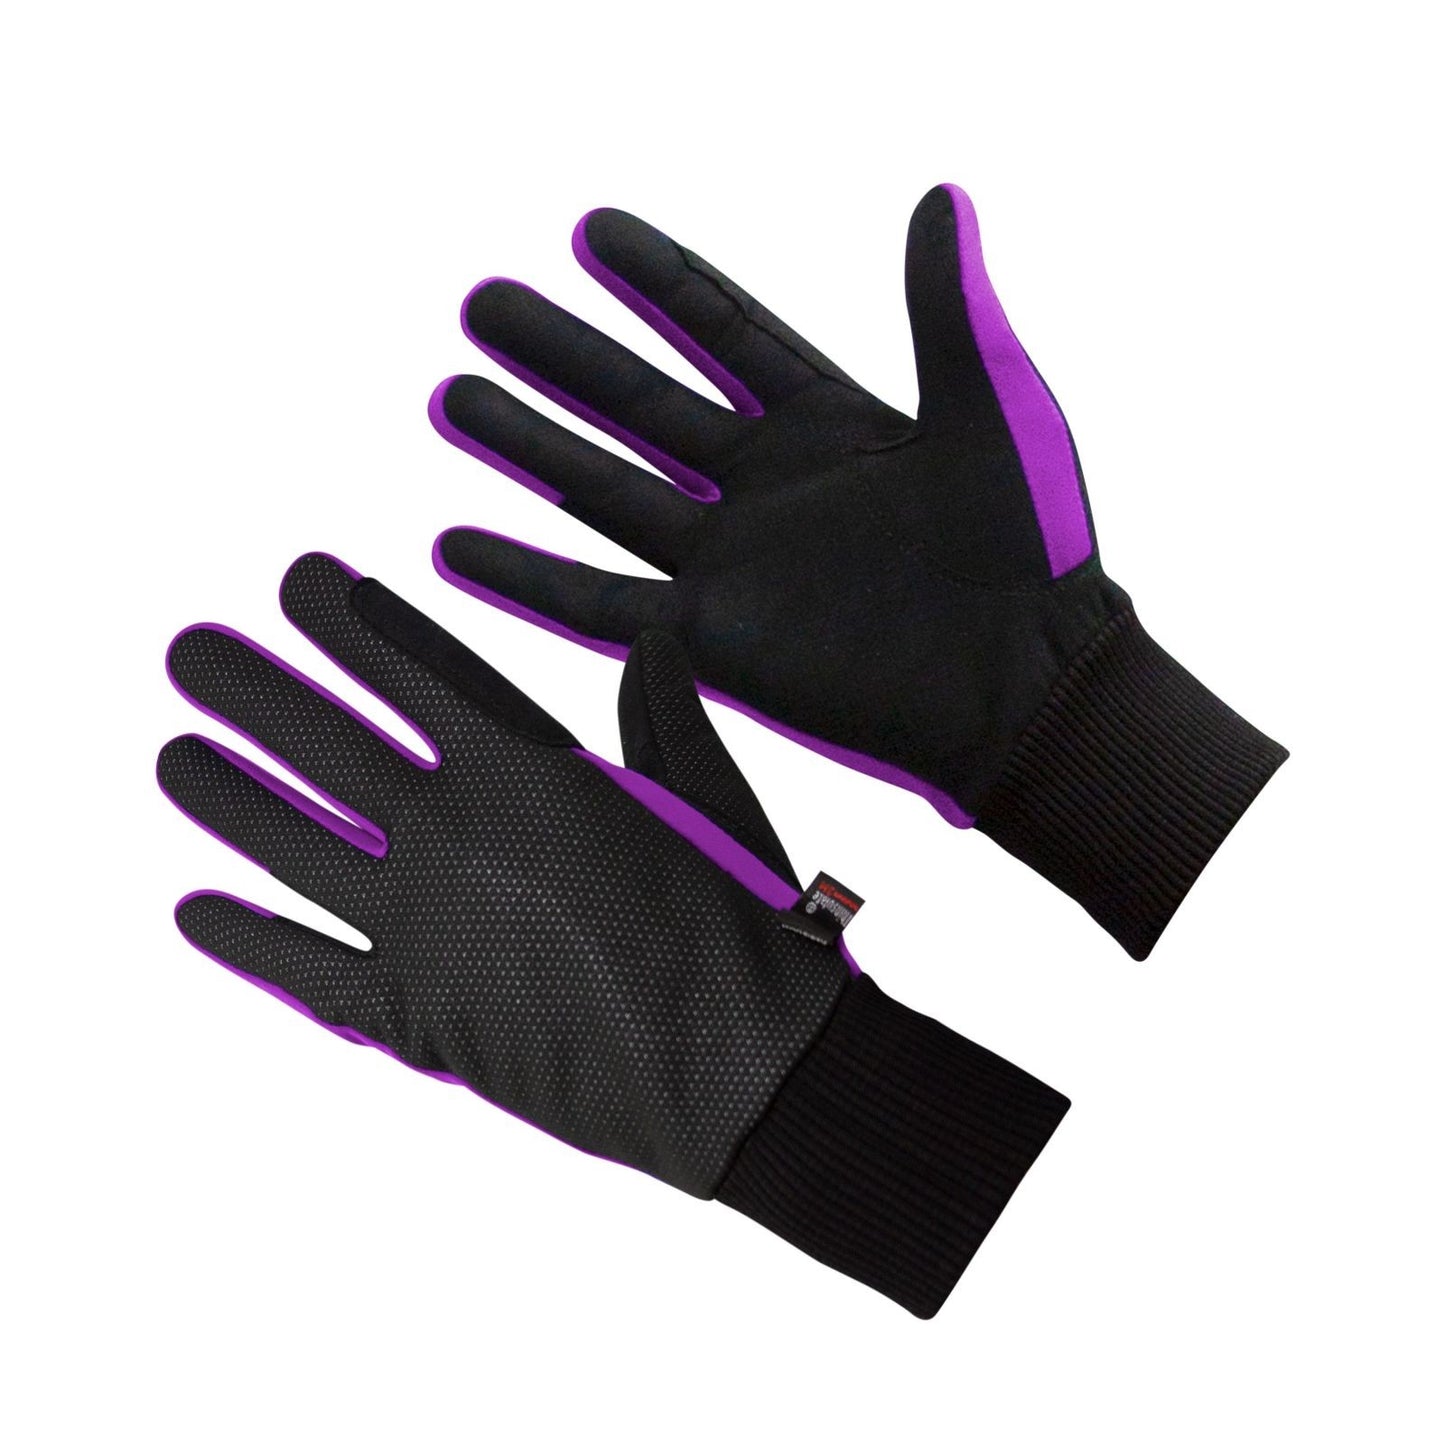 KM Winter Glove